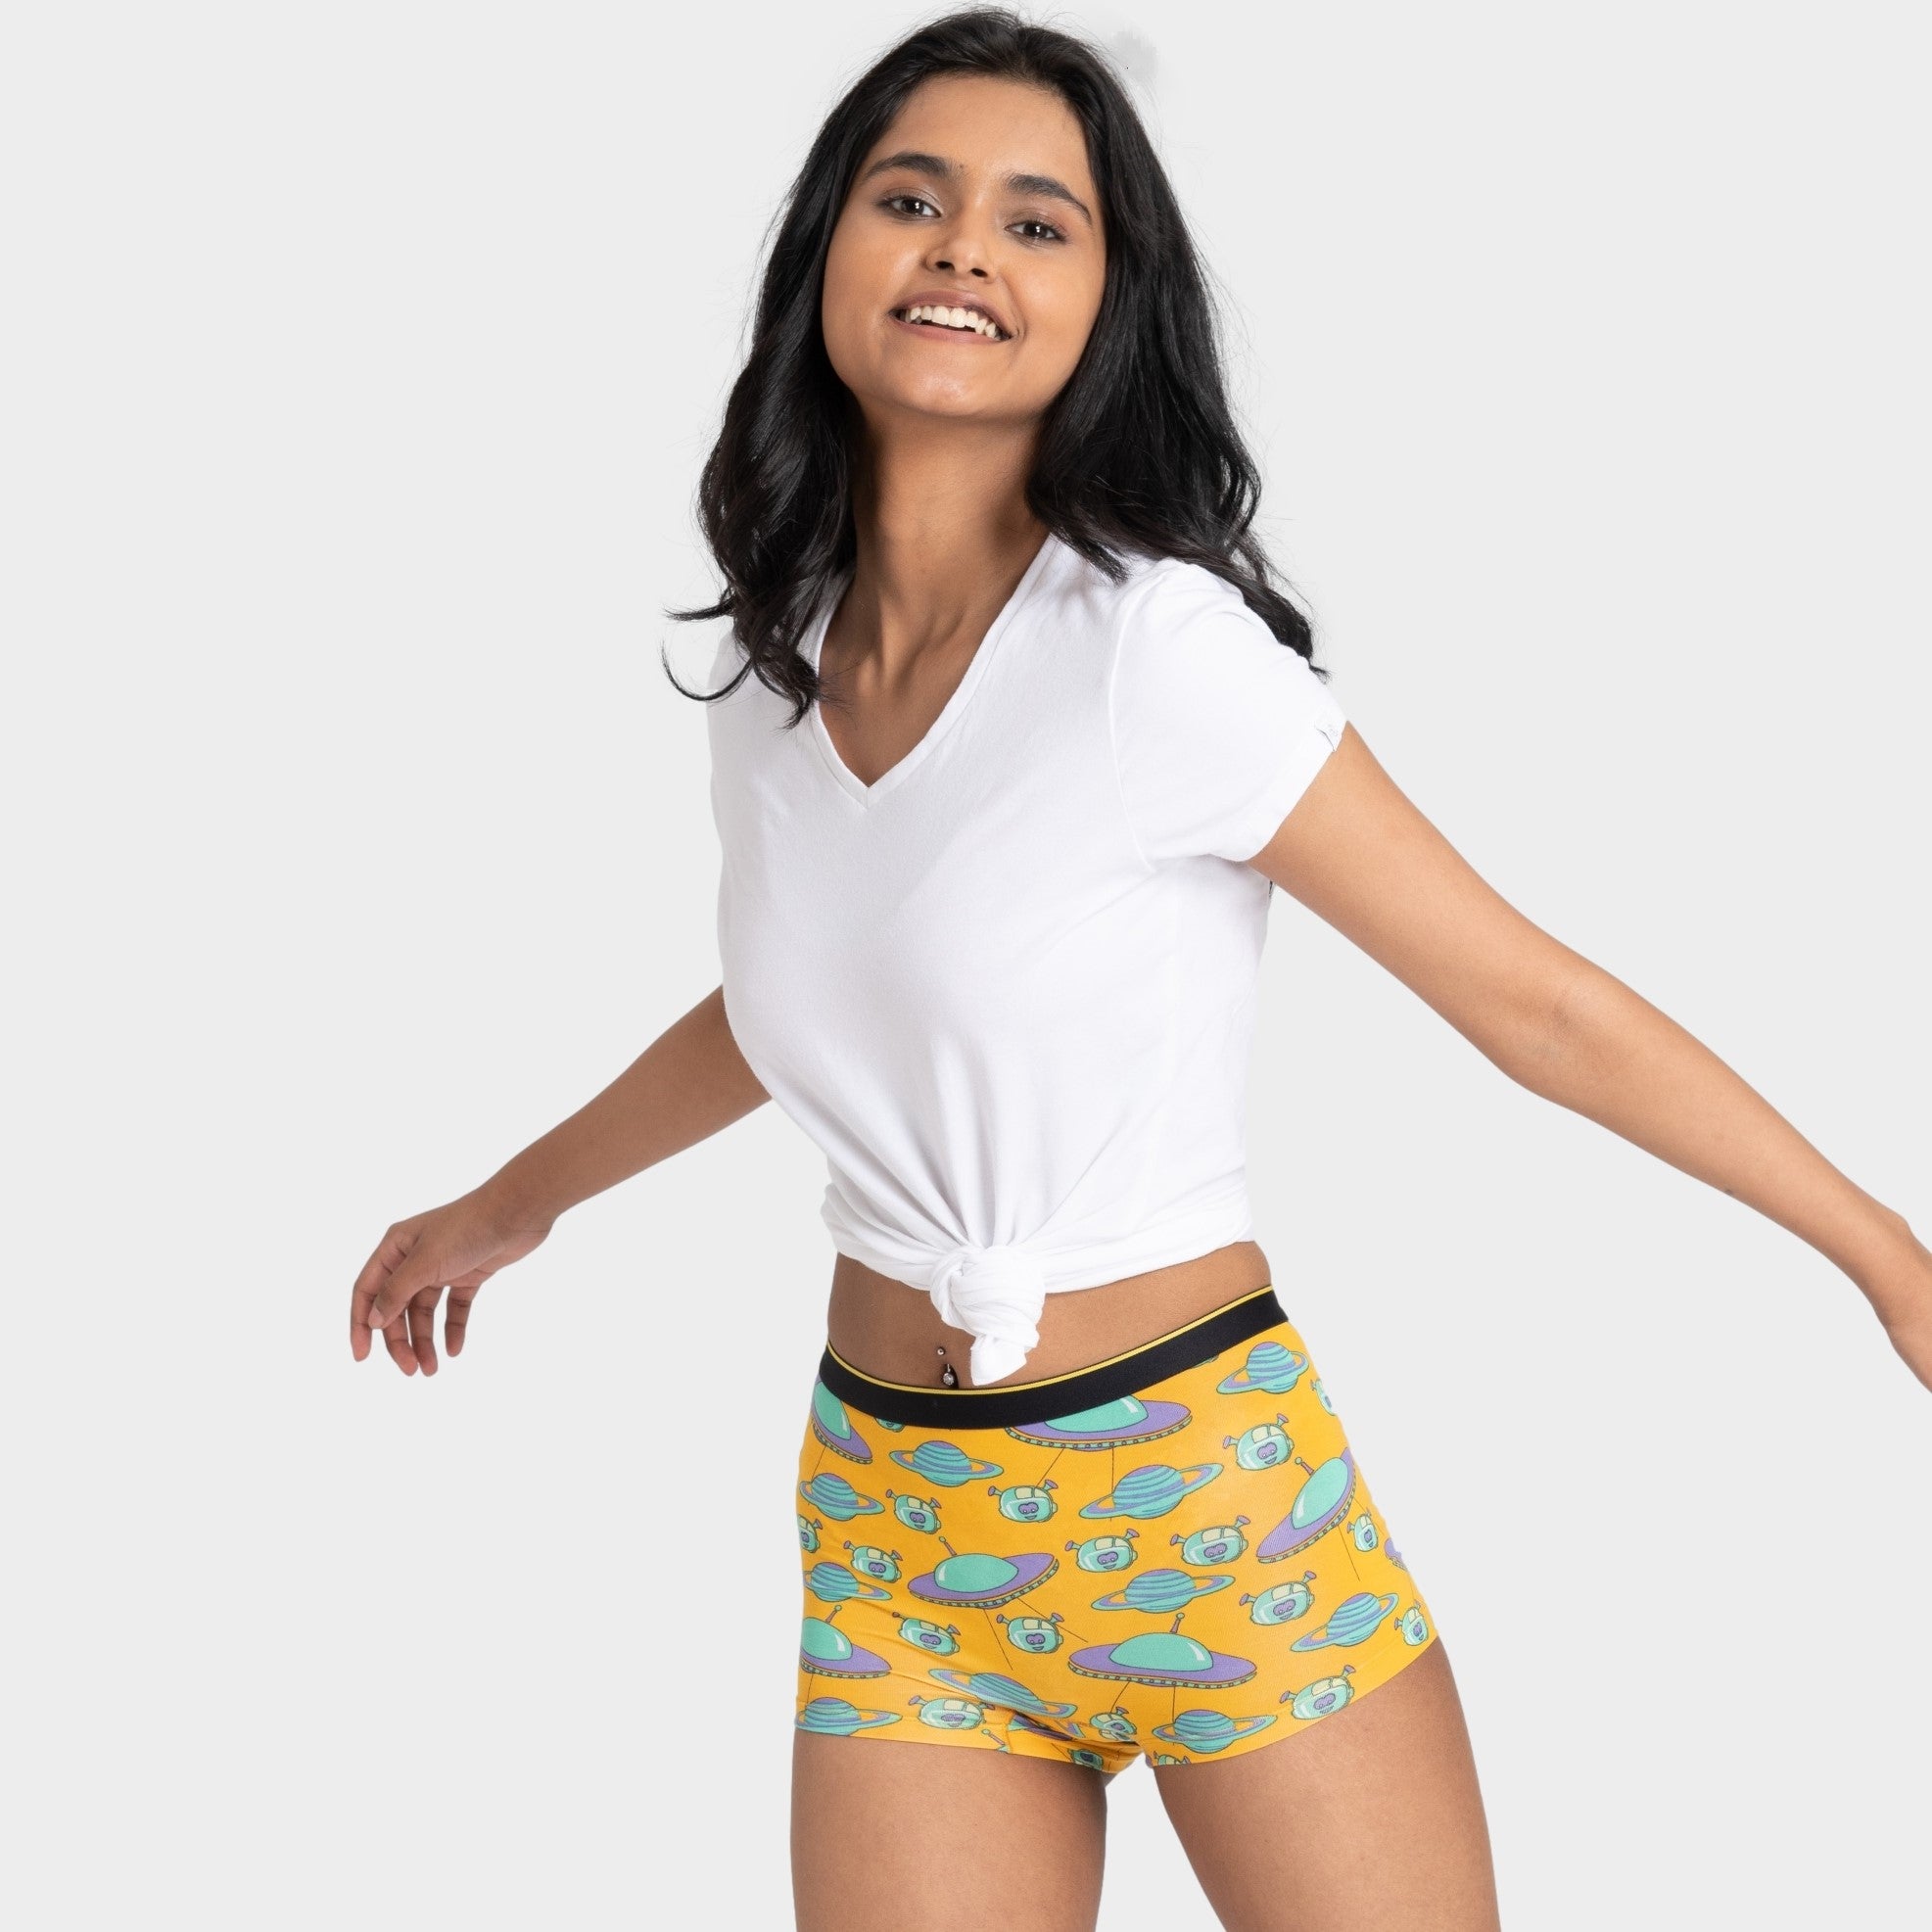 Buy Boy Shortspanties Underwear For Women online - Bummer